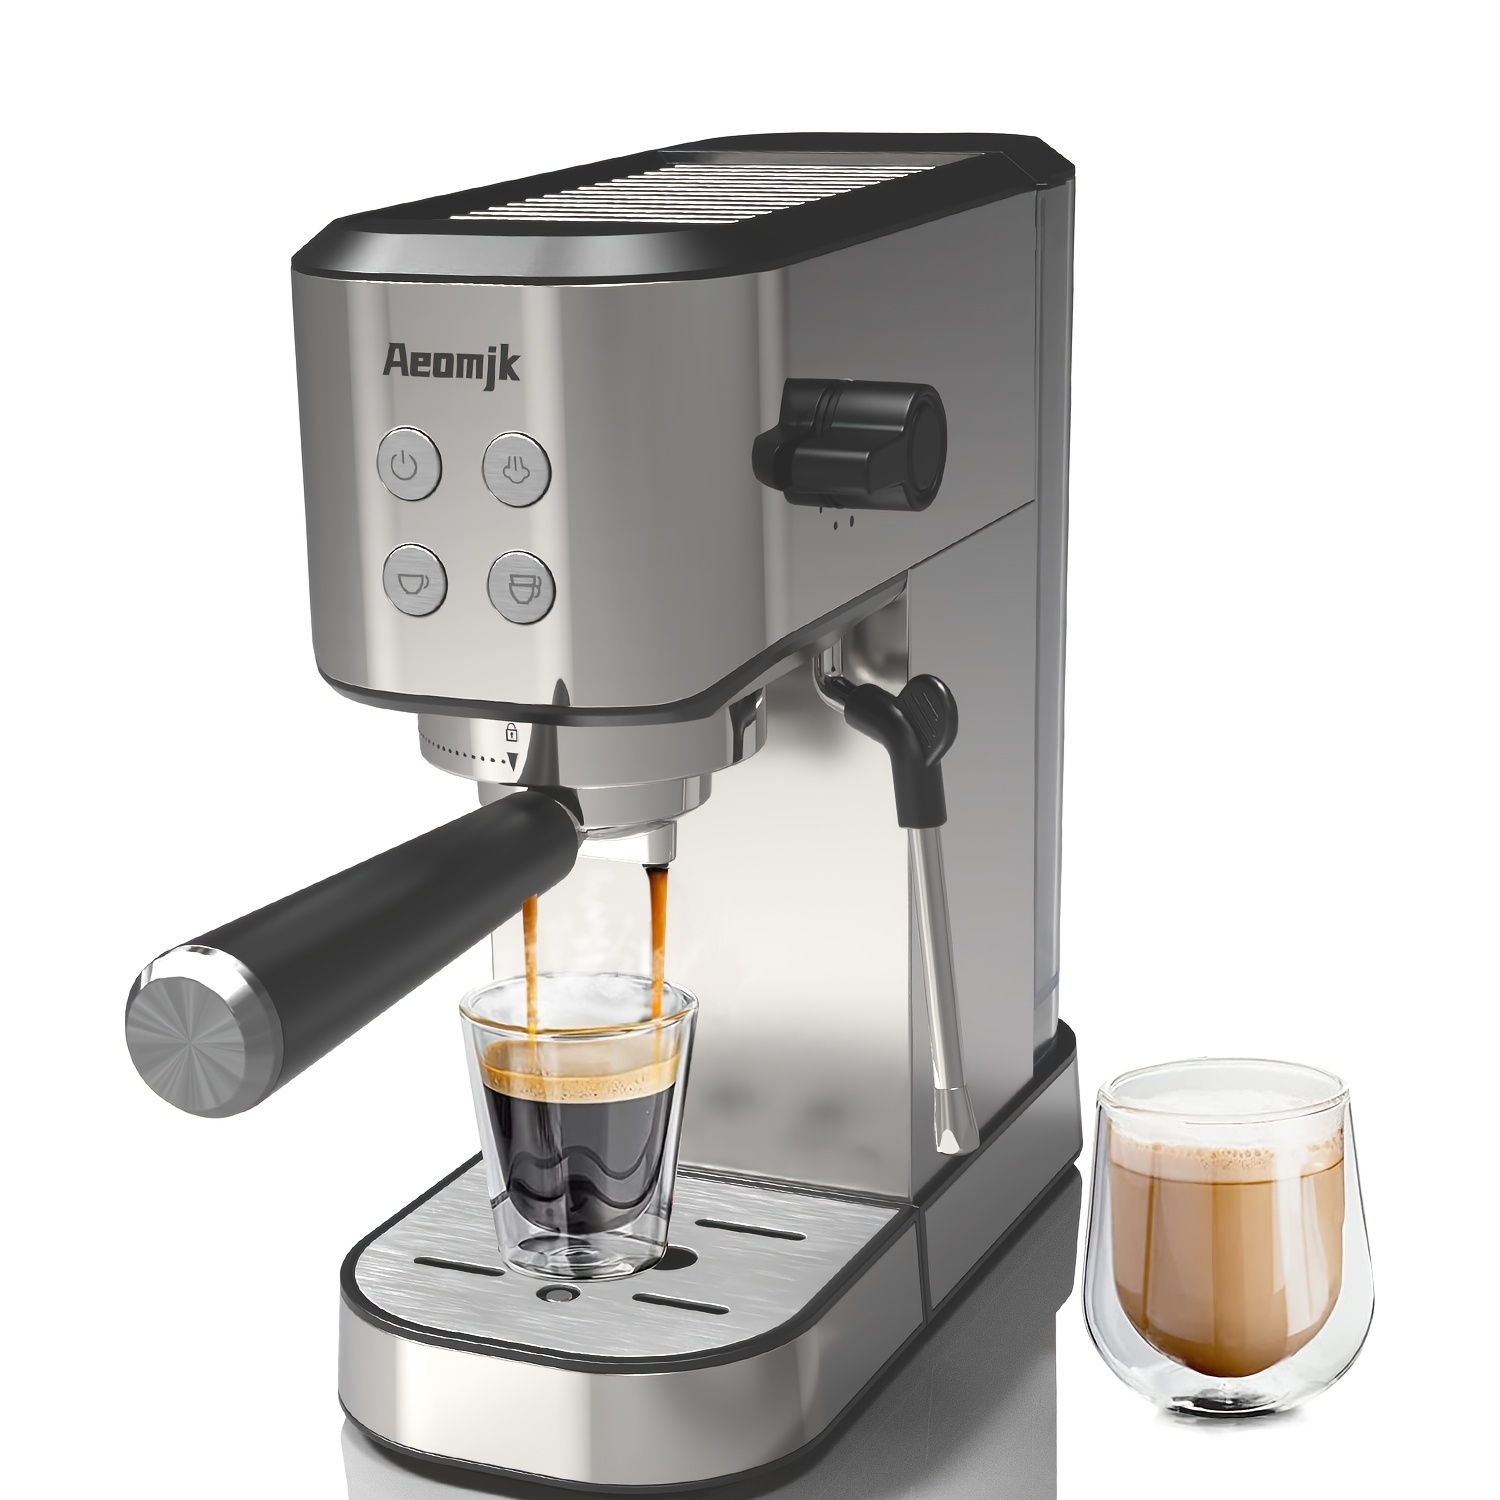 Aeomjk プロフェッショナルレベルのコーヒーマシン 20バール抽出